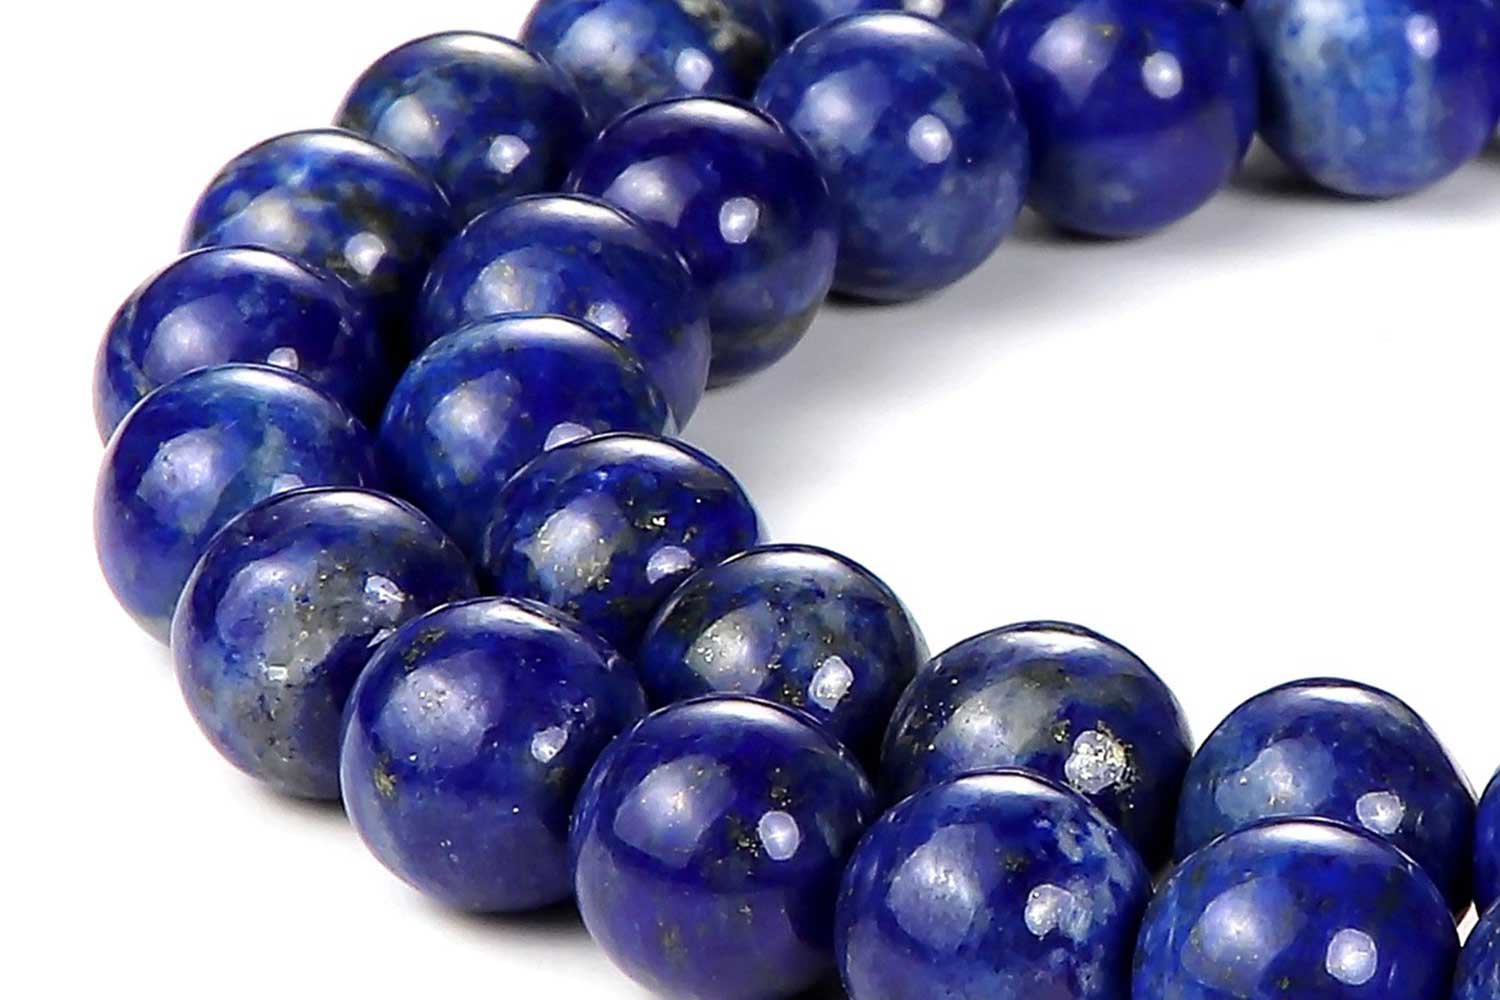 Lapis lazuli healing properties